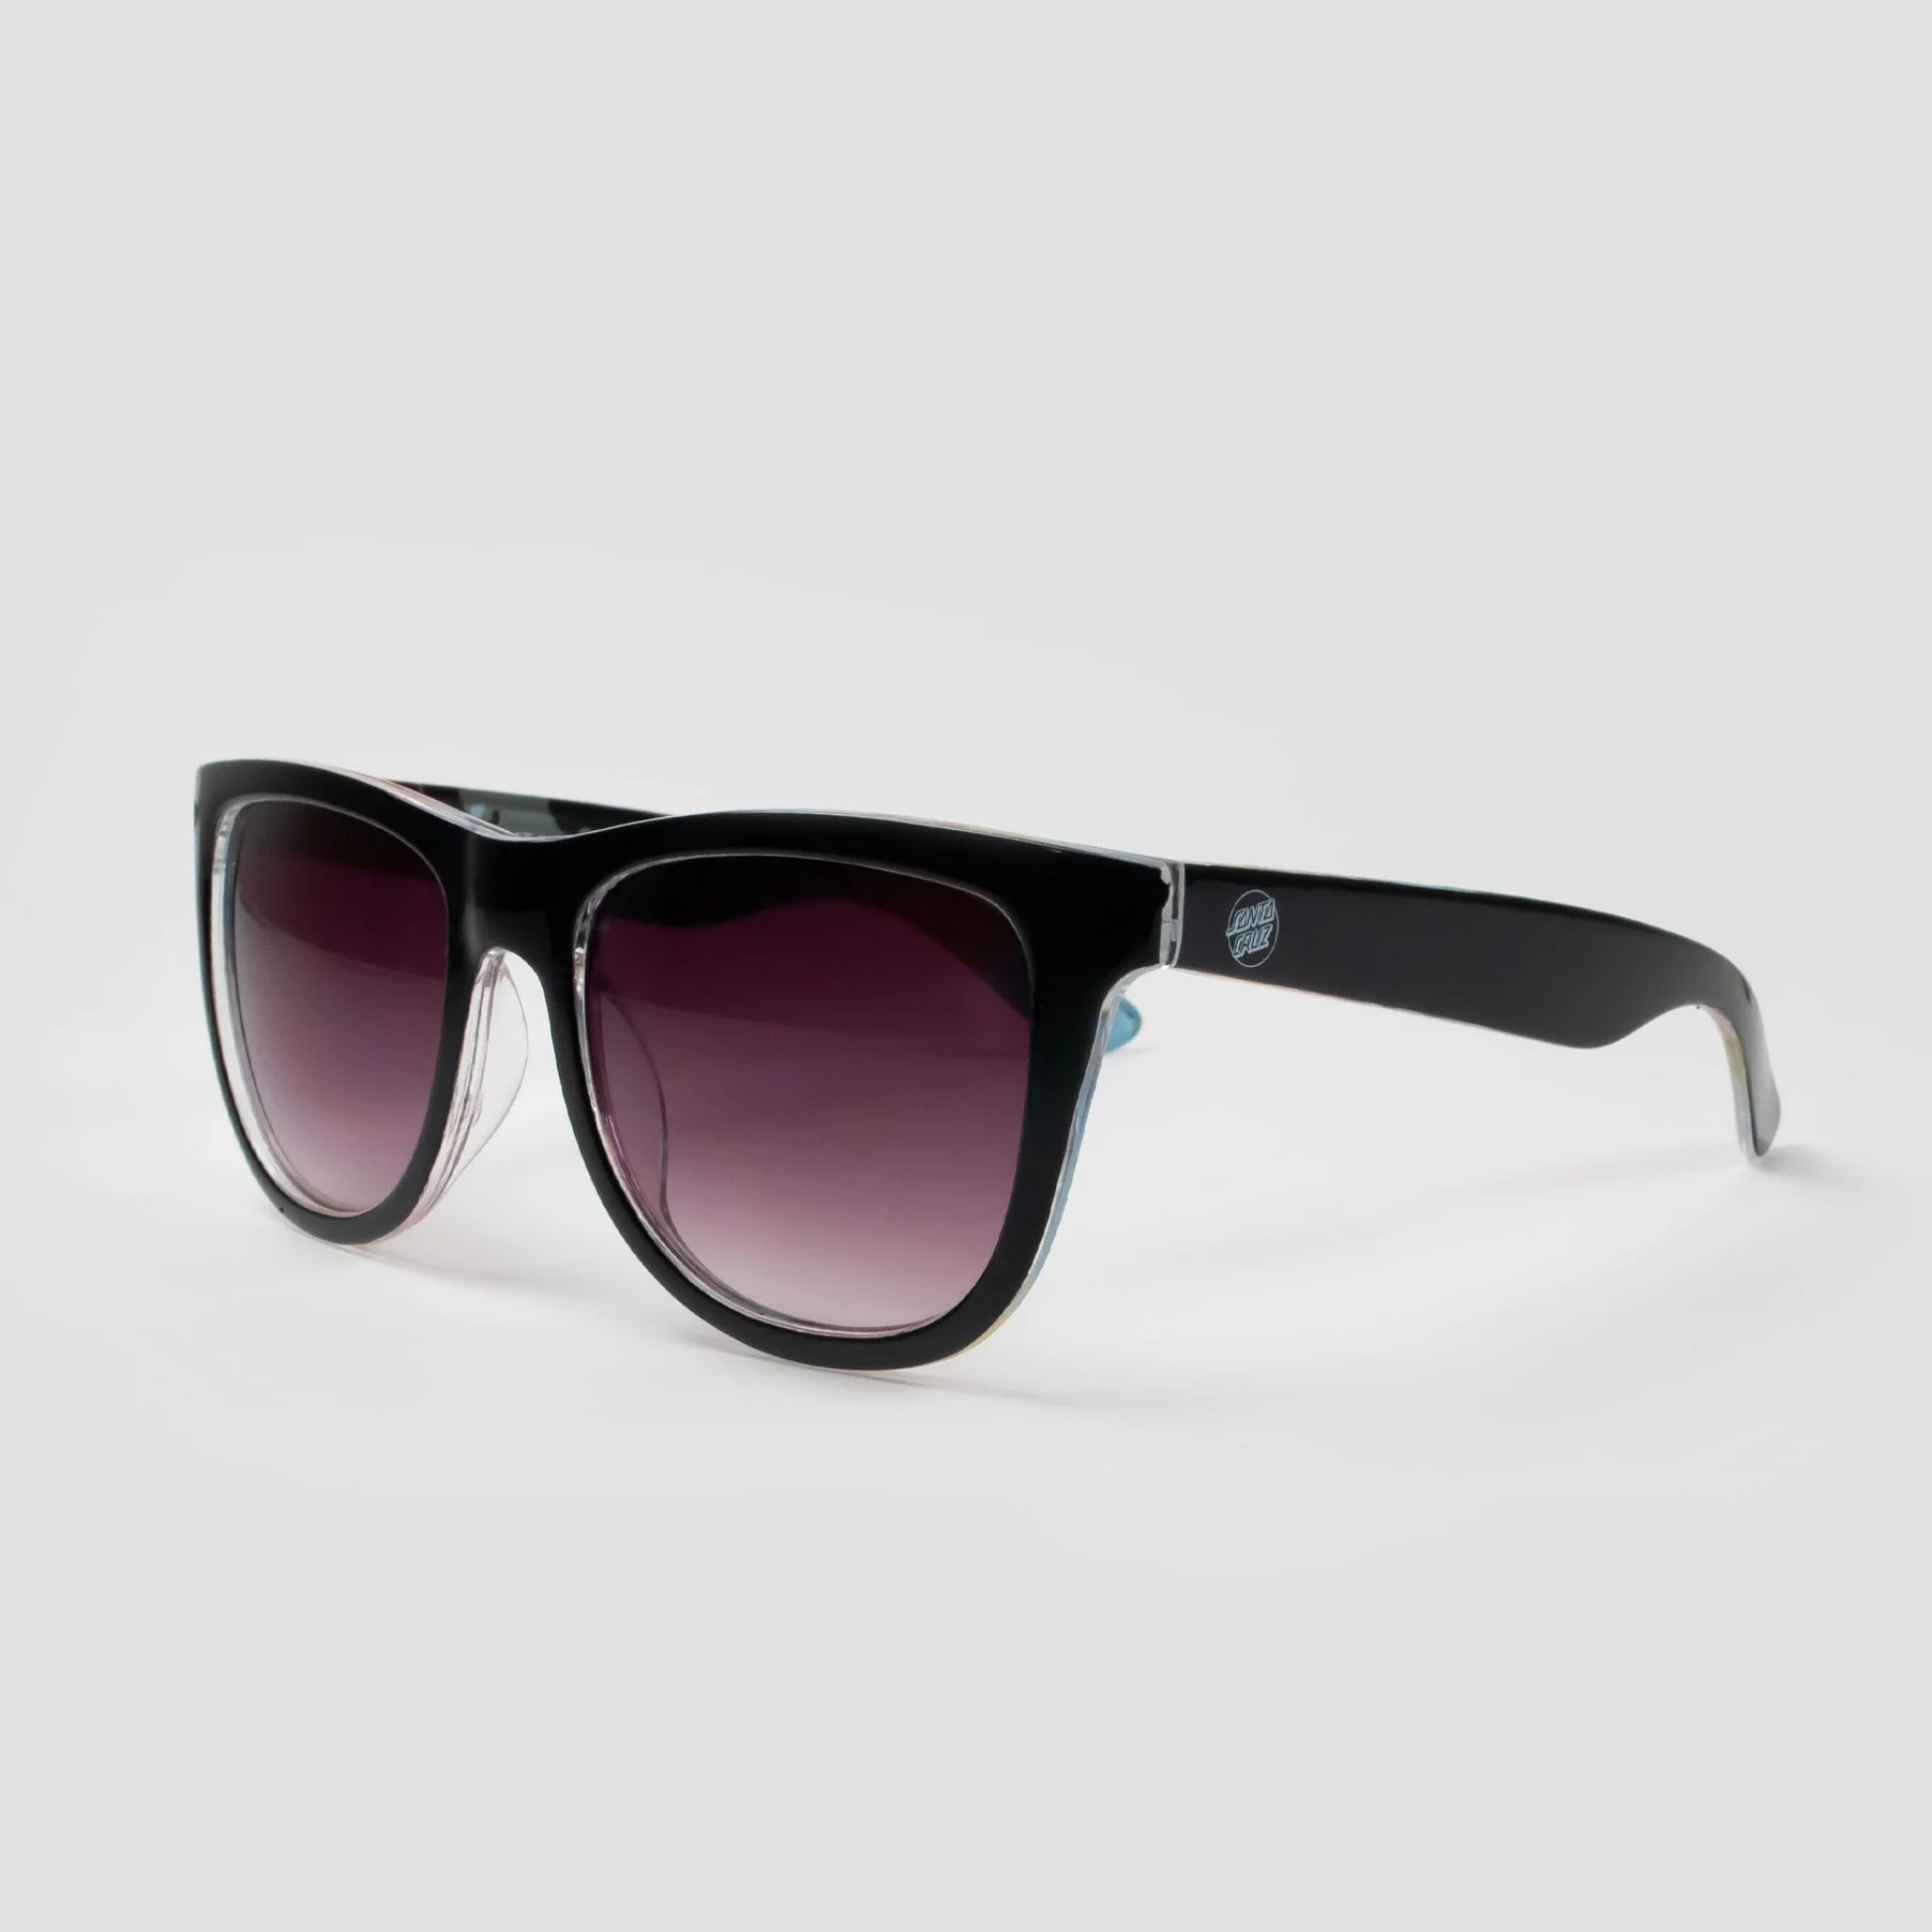 Santa Cruz Opus Dot Sunglasses - Black/Black Rainbow - Prime Delux Store